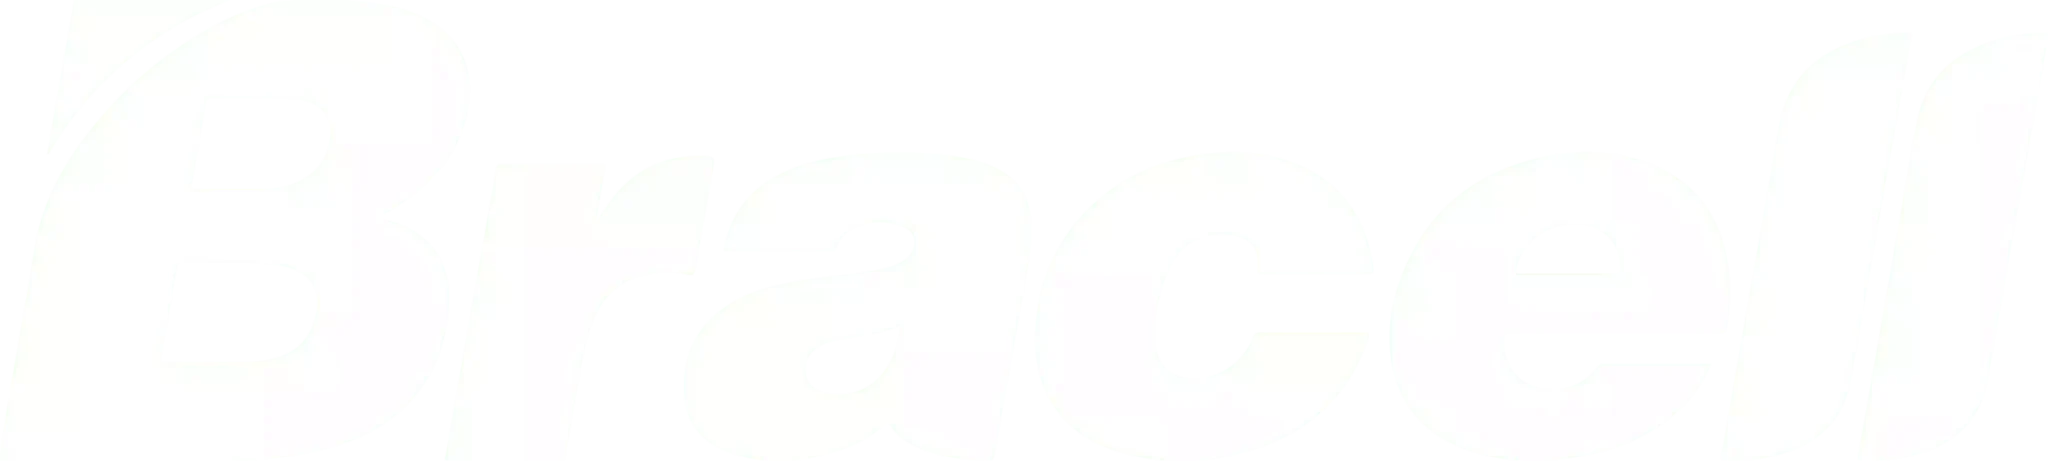 Logo PretoAtivo 102500x-8-min